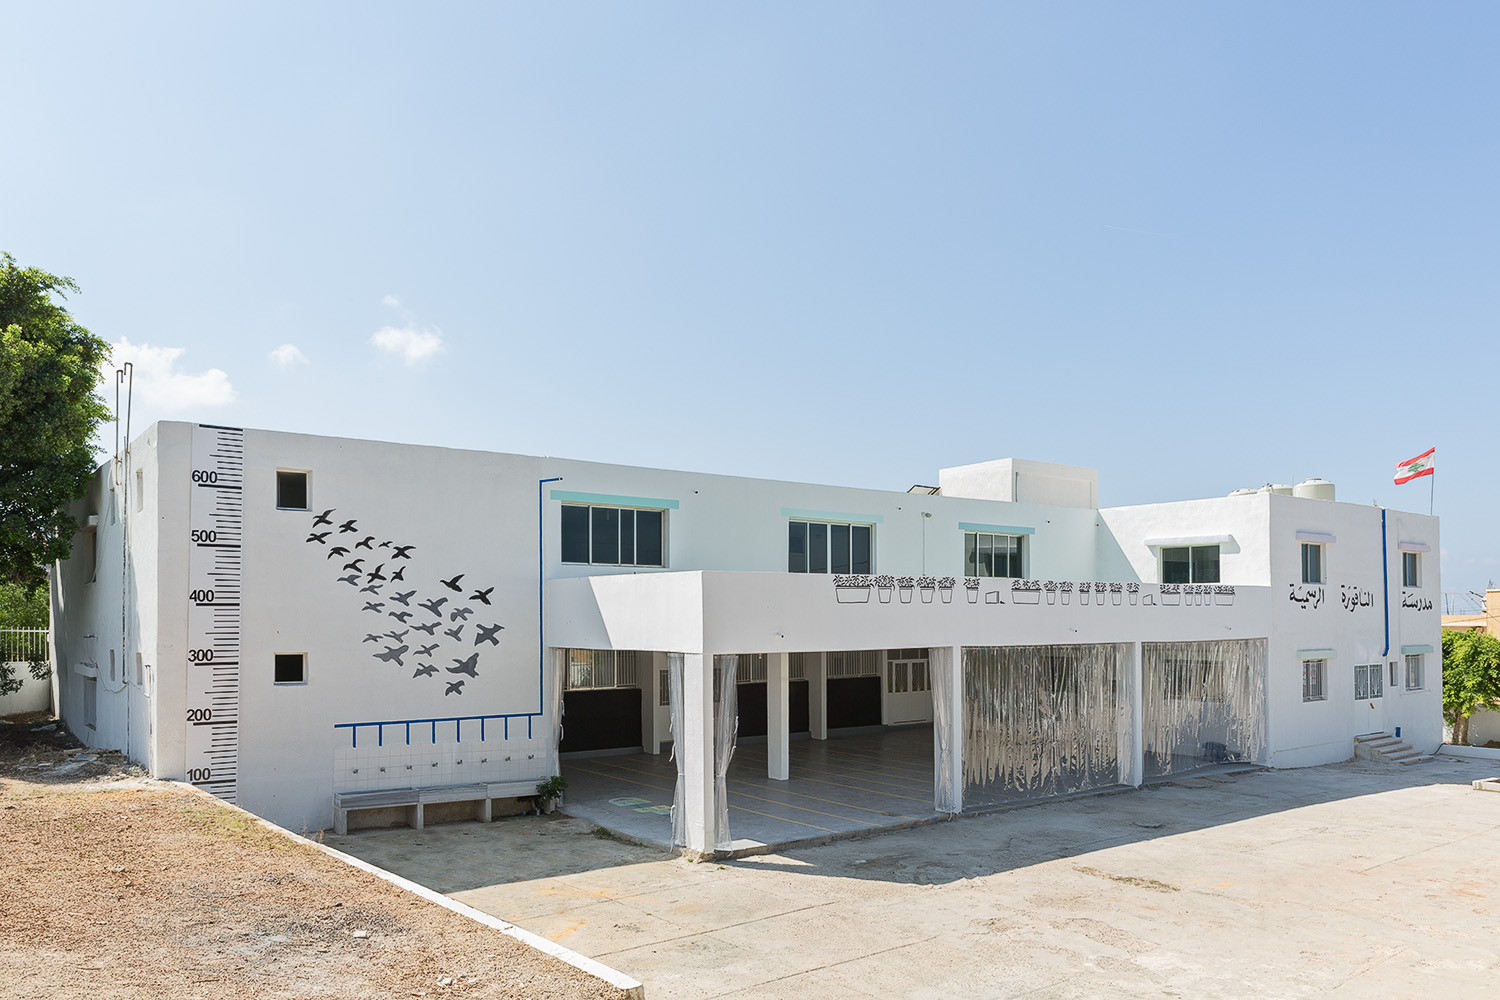  Naqoura Public School - Karim Nader Studio and Blankpage Architects 